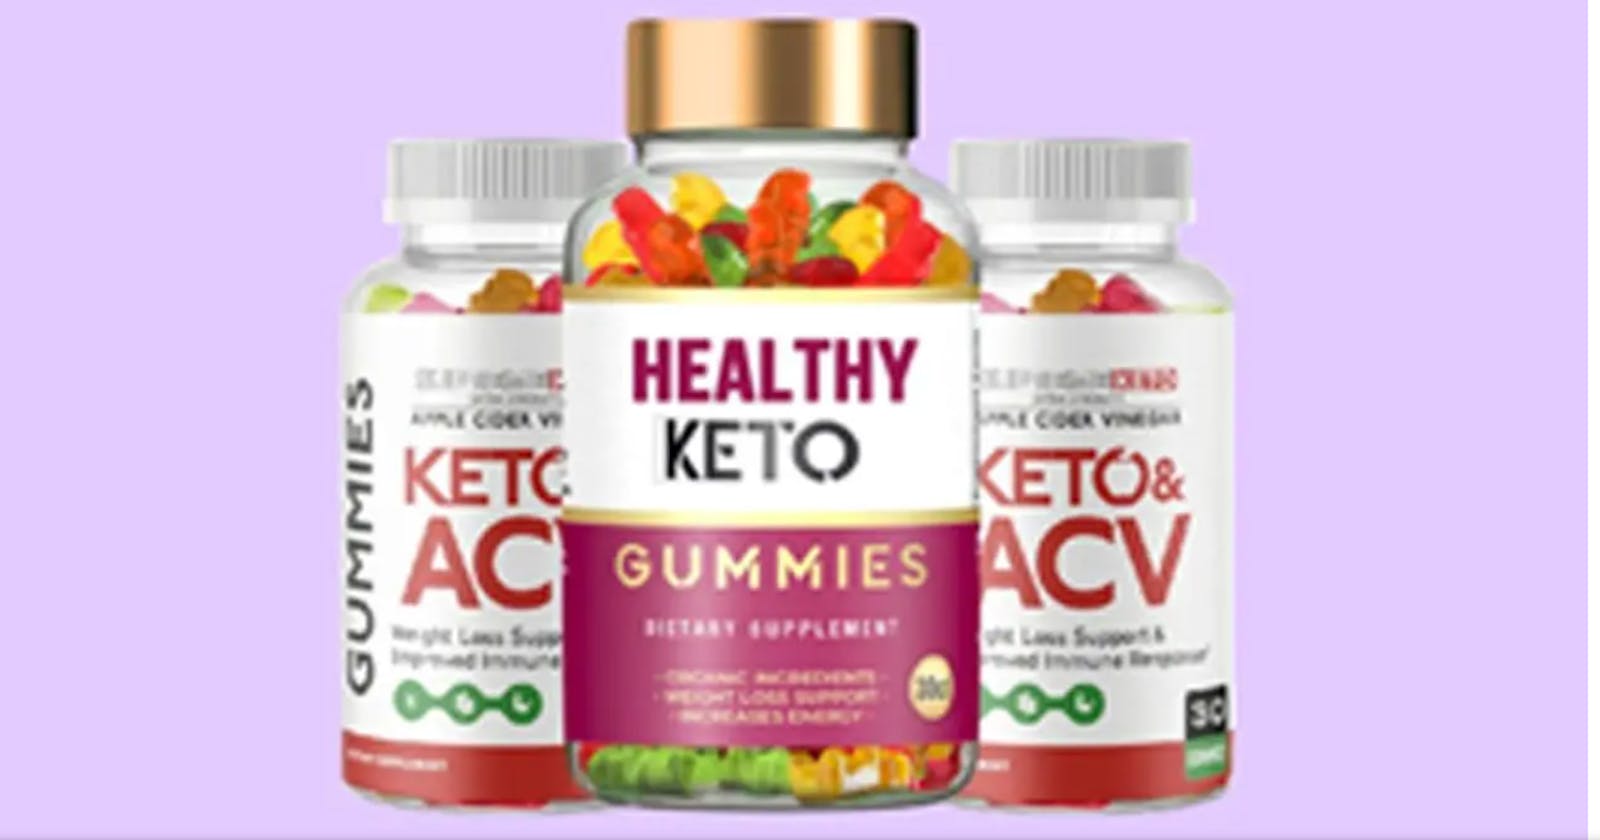 Healthy Keto Gummies Reviews, Shark tank, Cost, Ingredients & Where To Buy?